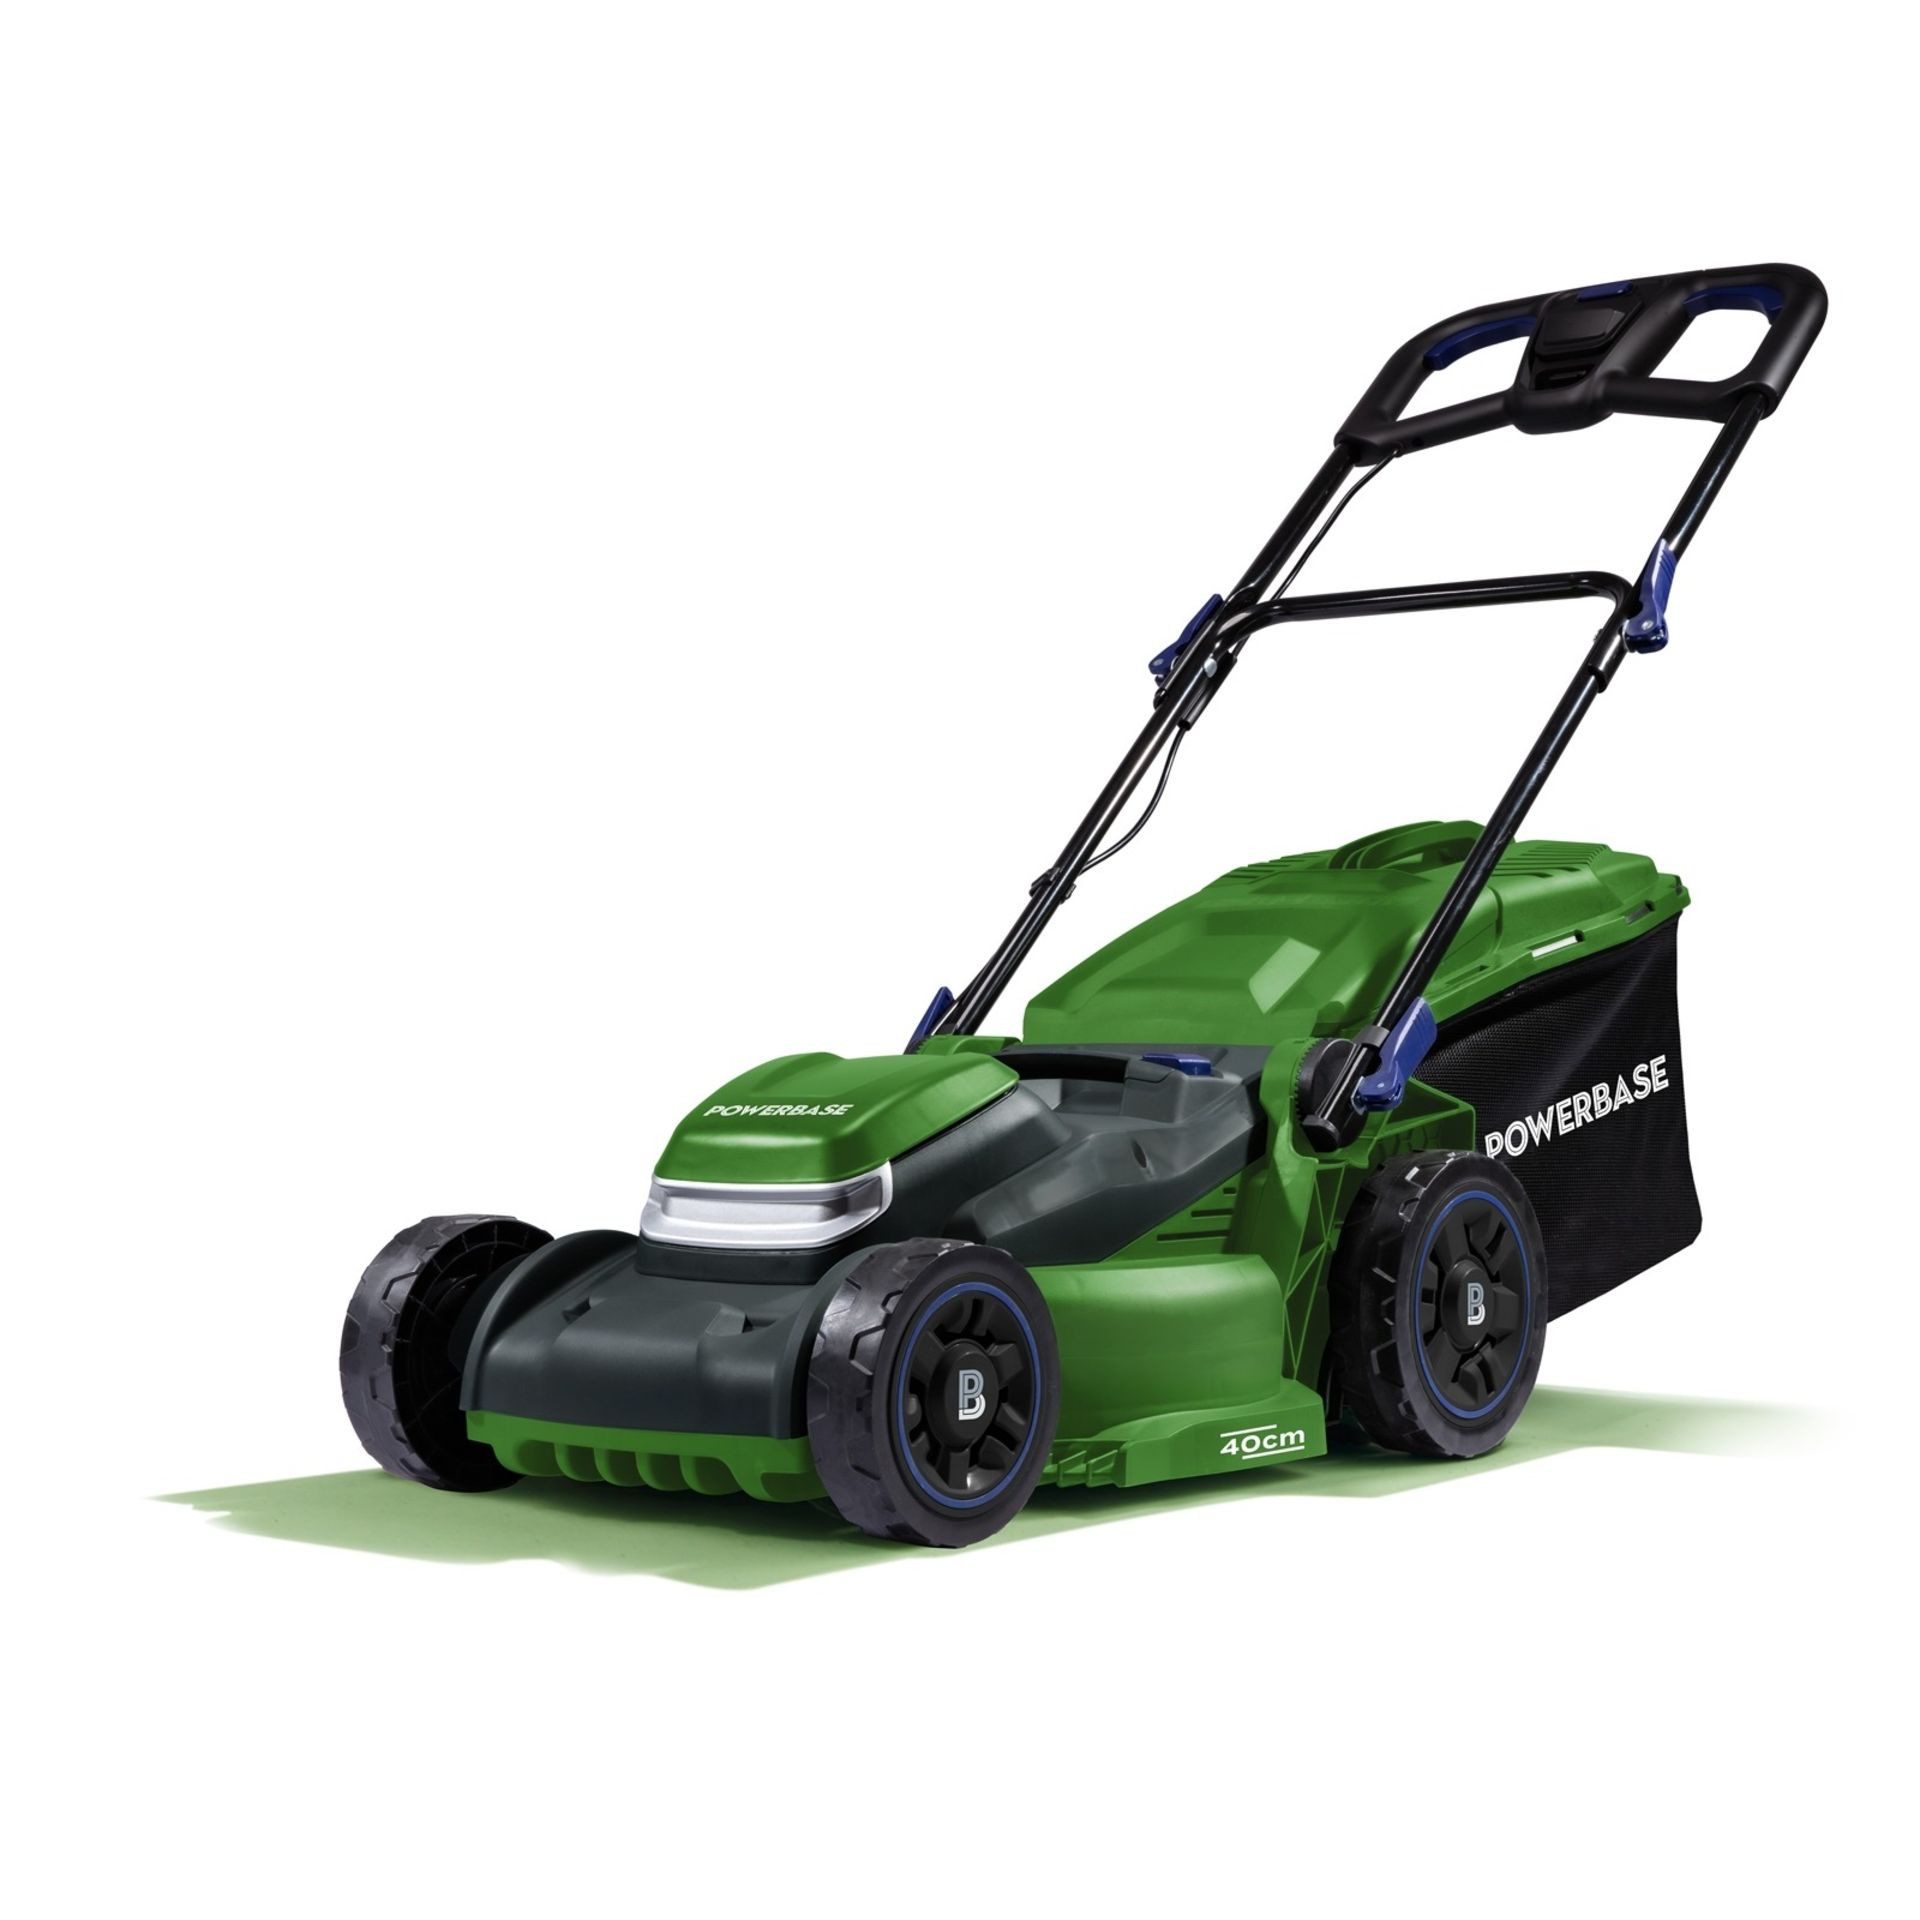 Powerbase 40cm 40V Cordless Lawn Mower - ER29